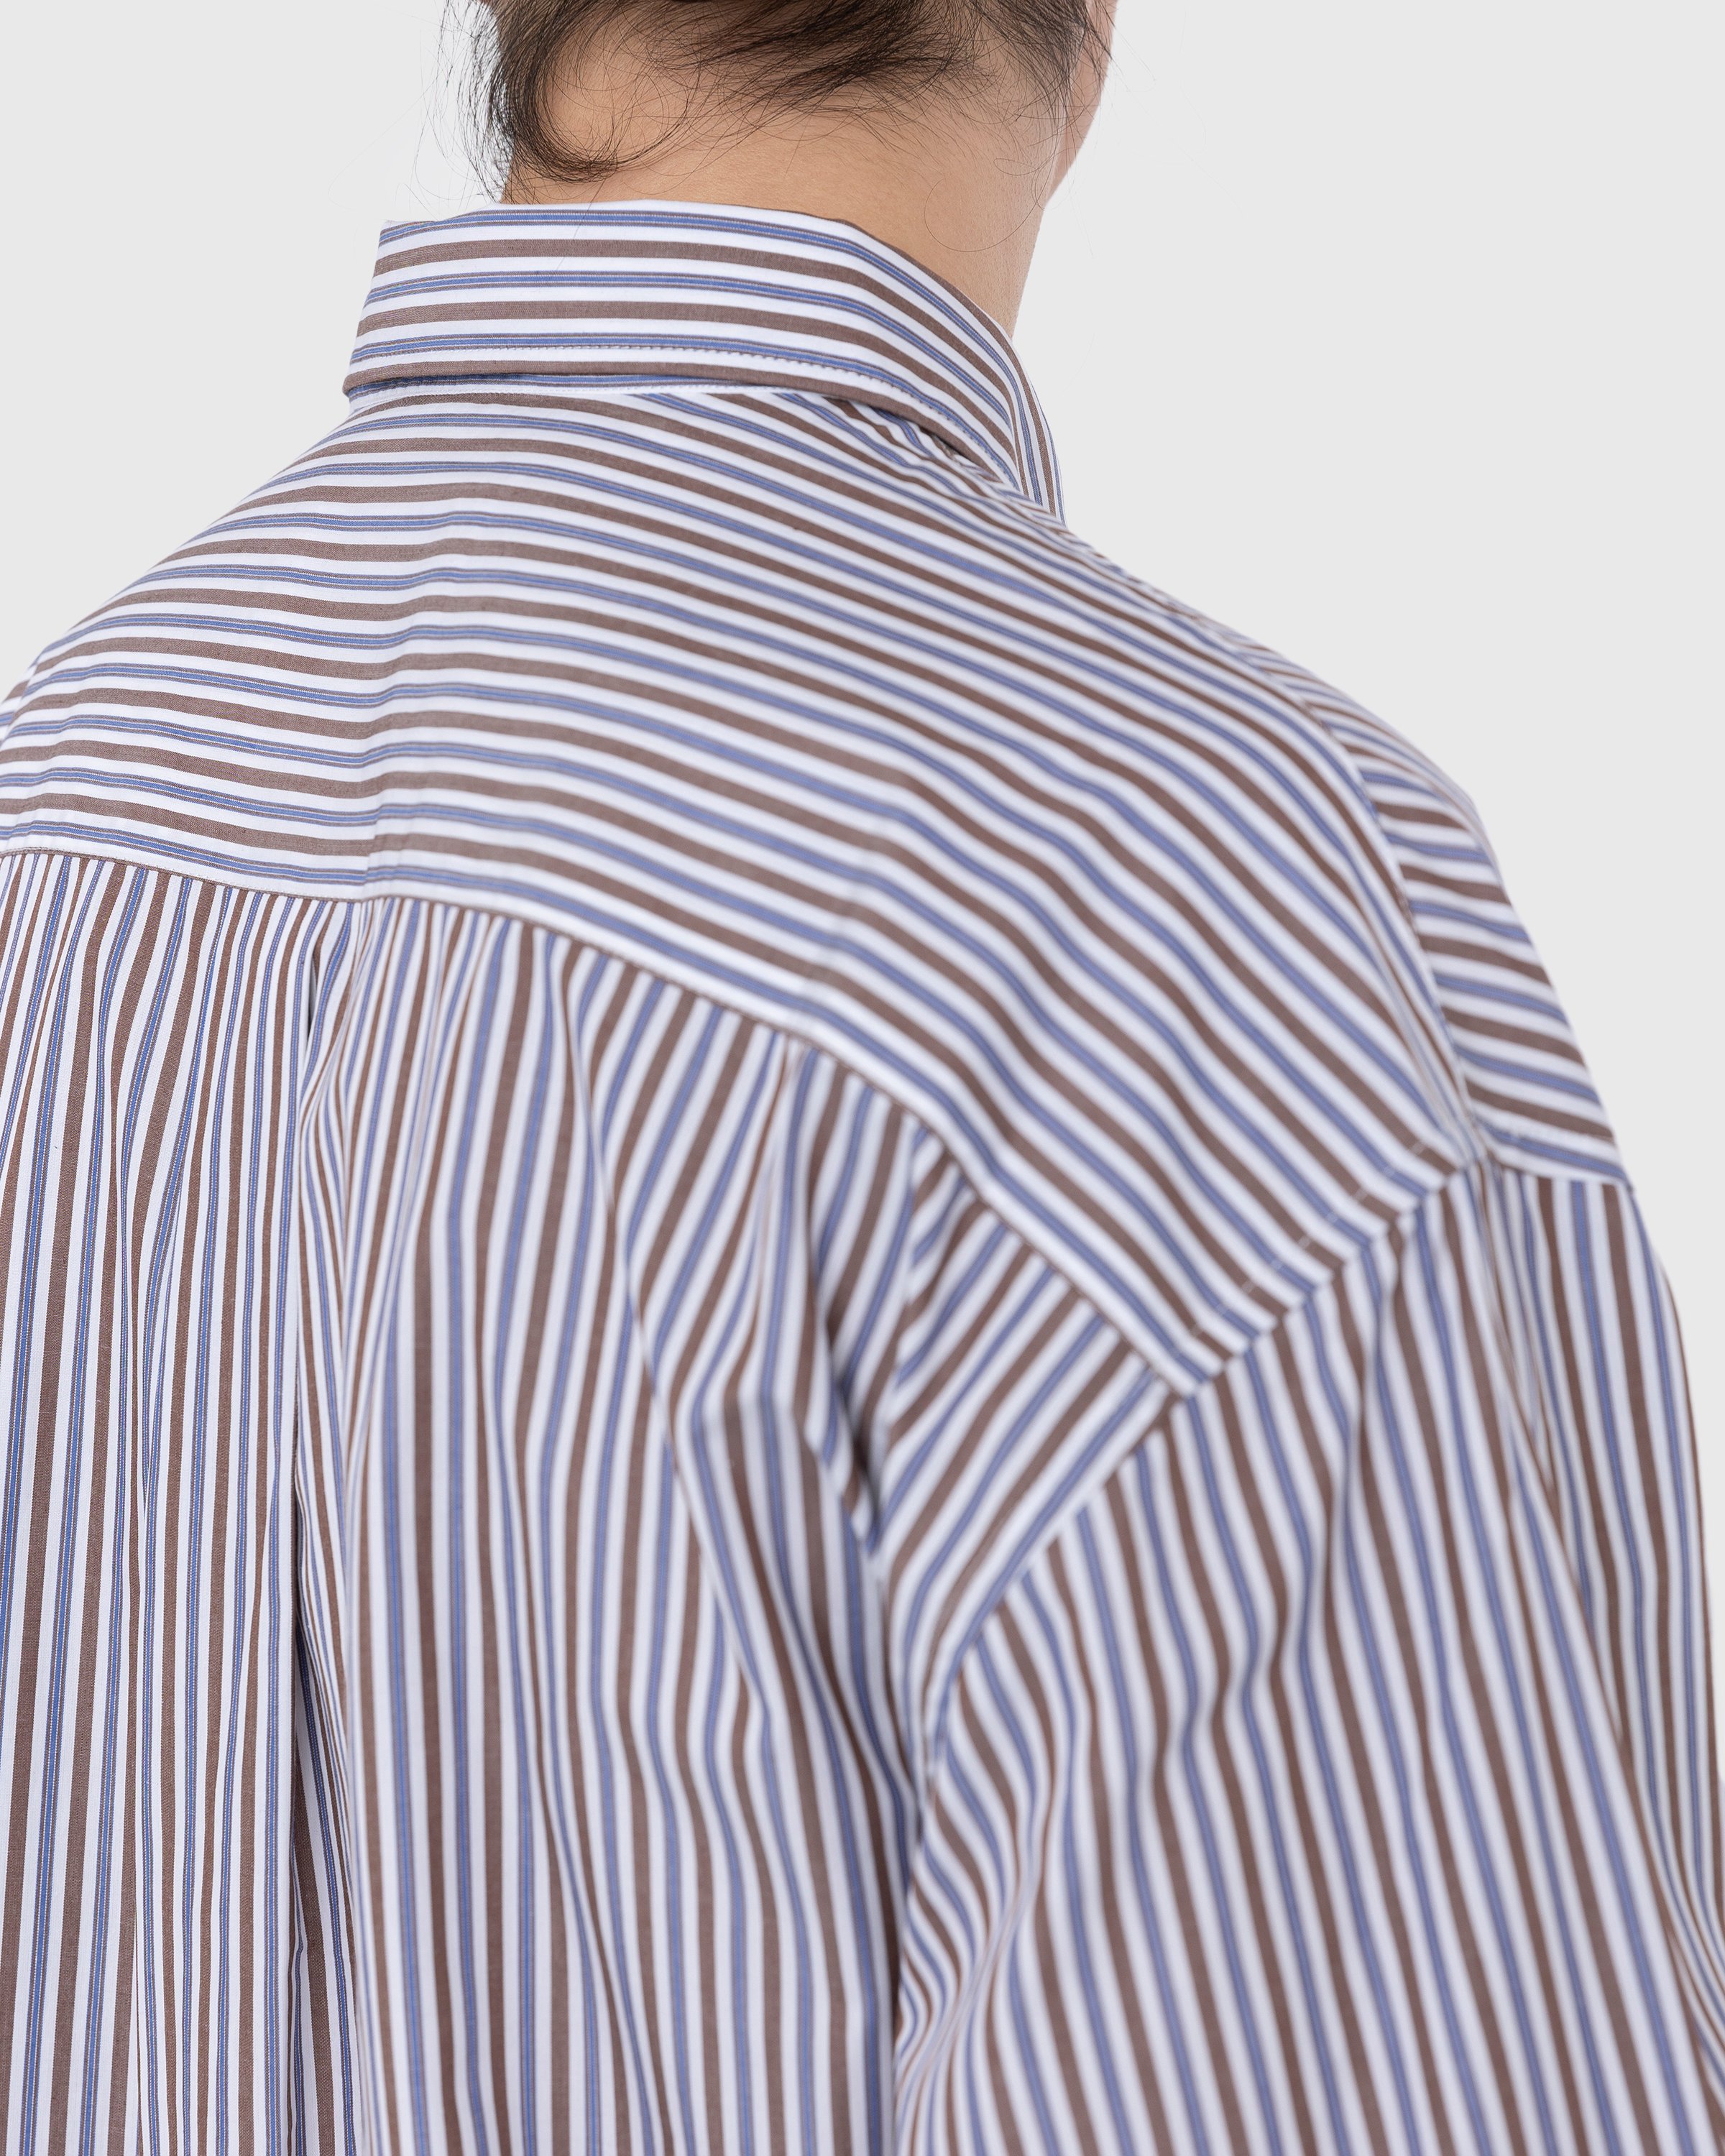 Highsnobiety - Striped Dress Shirt White/Black - Clothing - Multi - Image 5